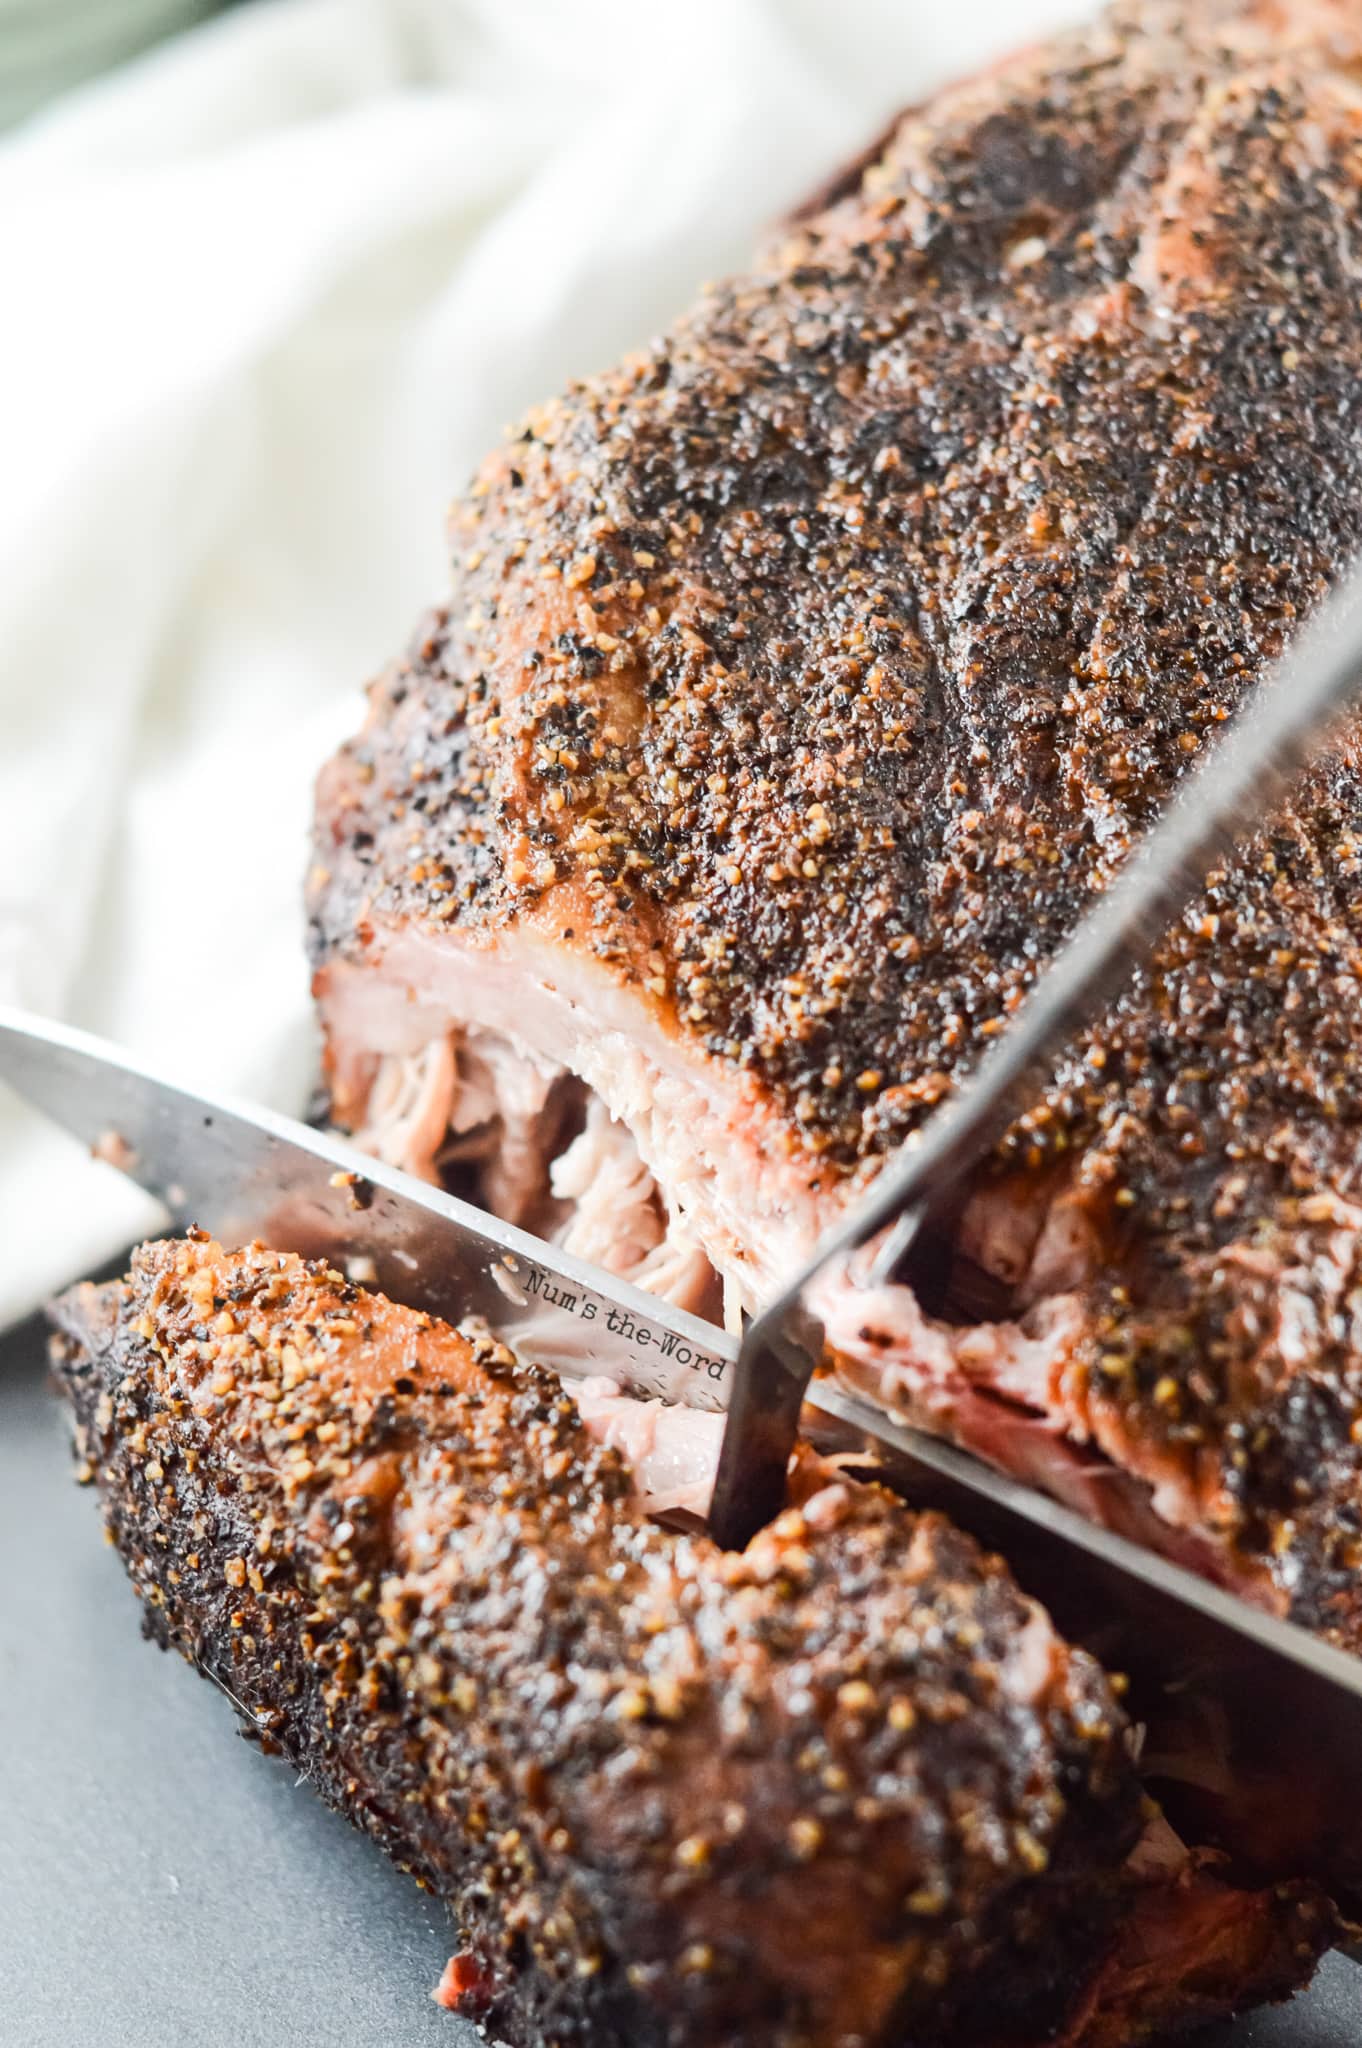 Smoked Pork Shoulder - pork shoulder cooked and sliced open to show how tender the pork is inside.